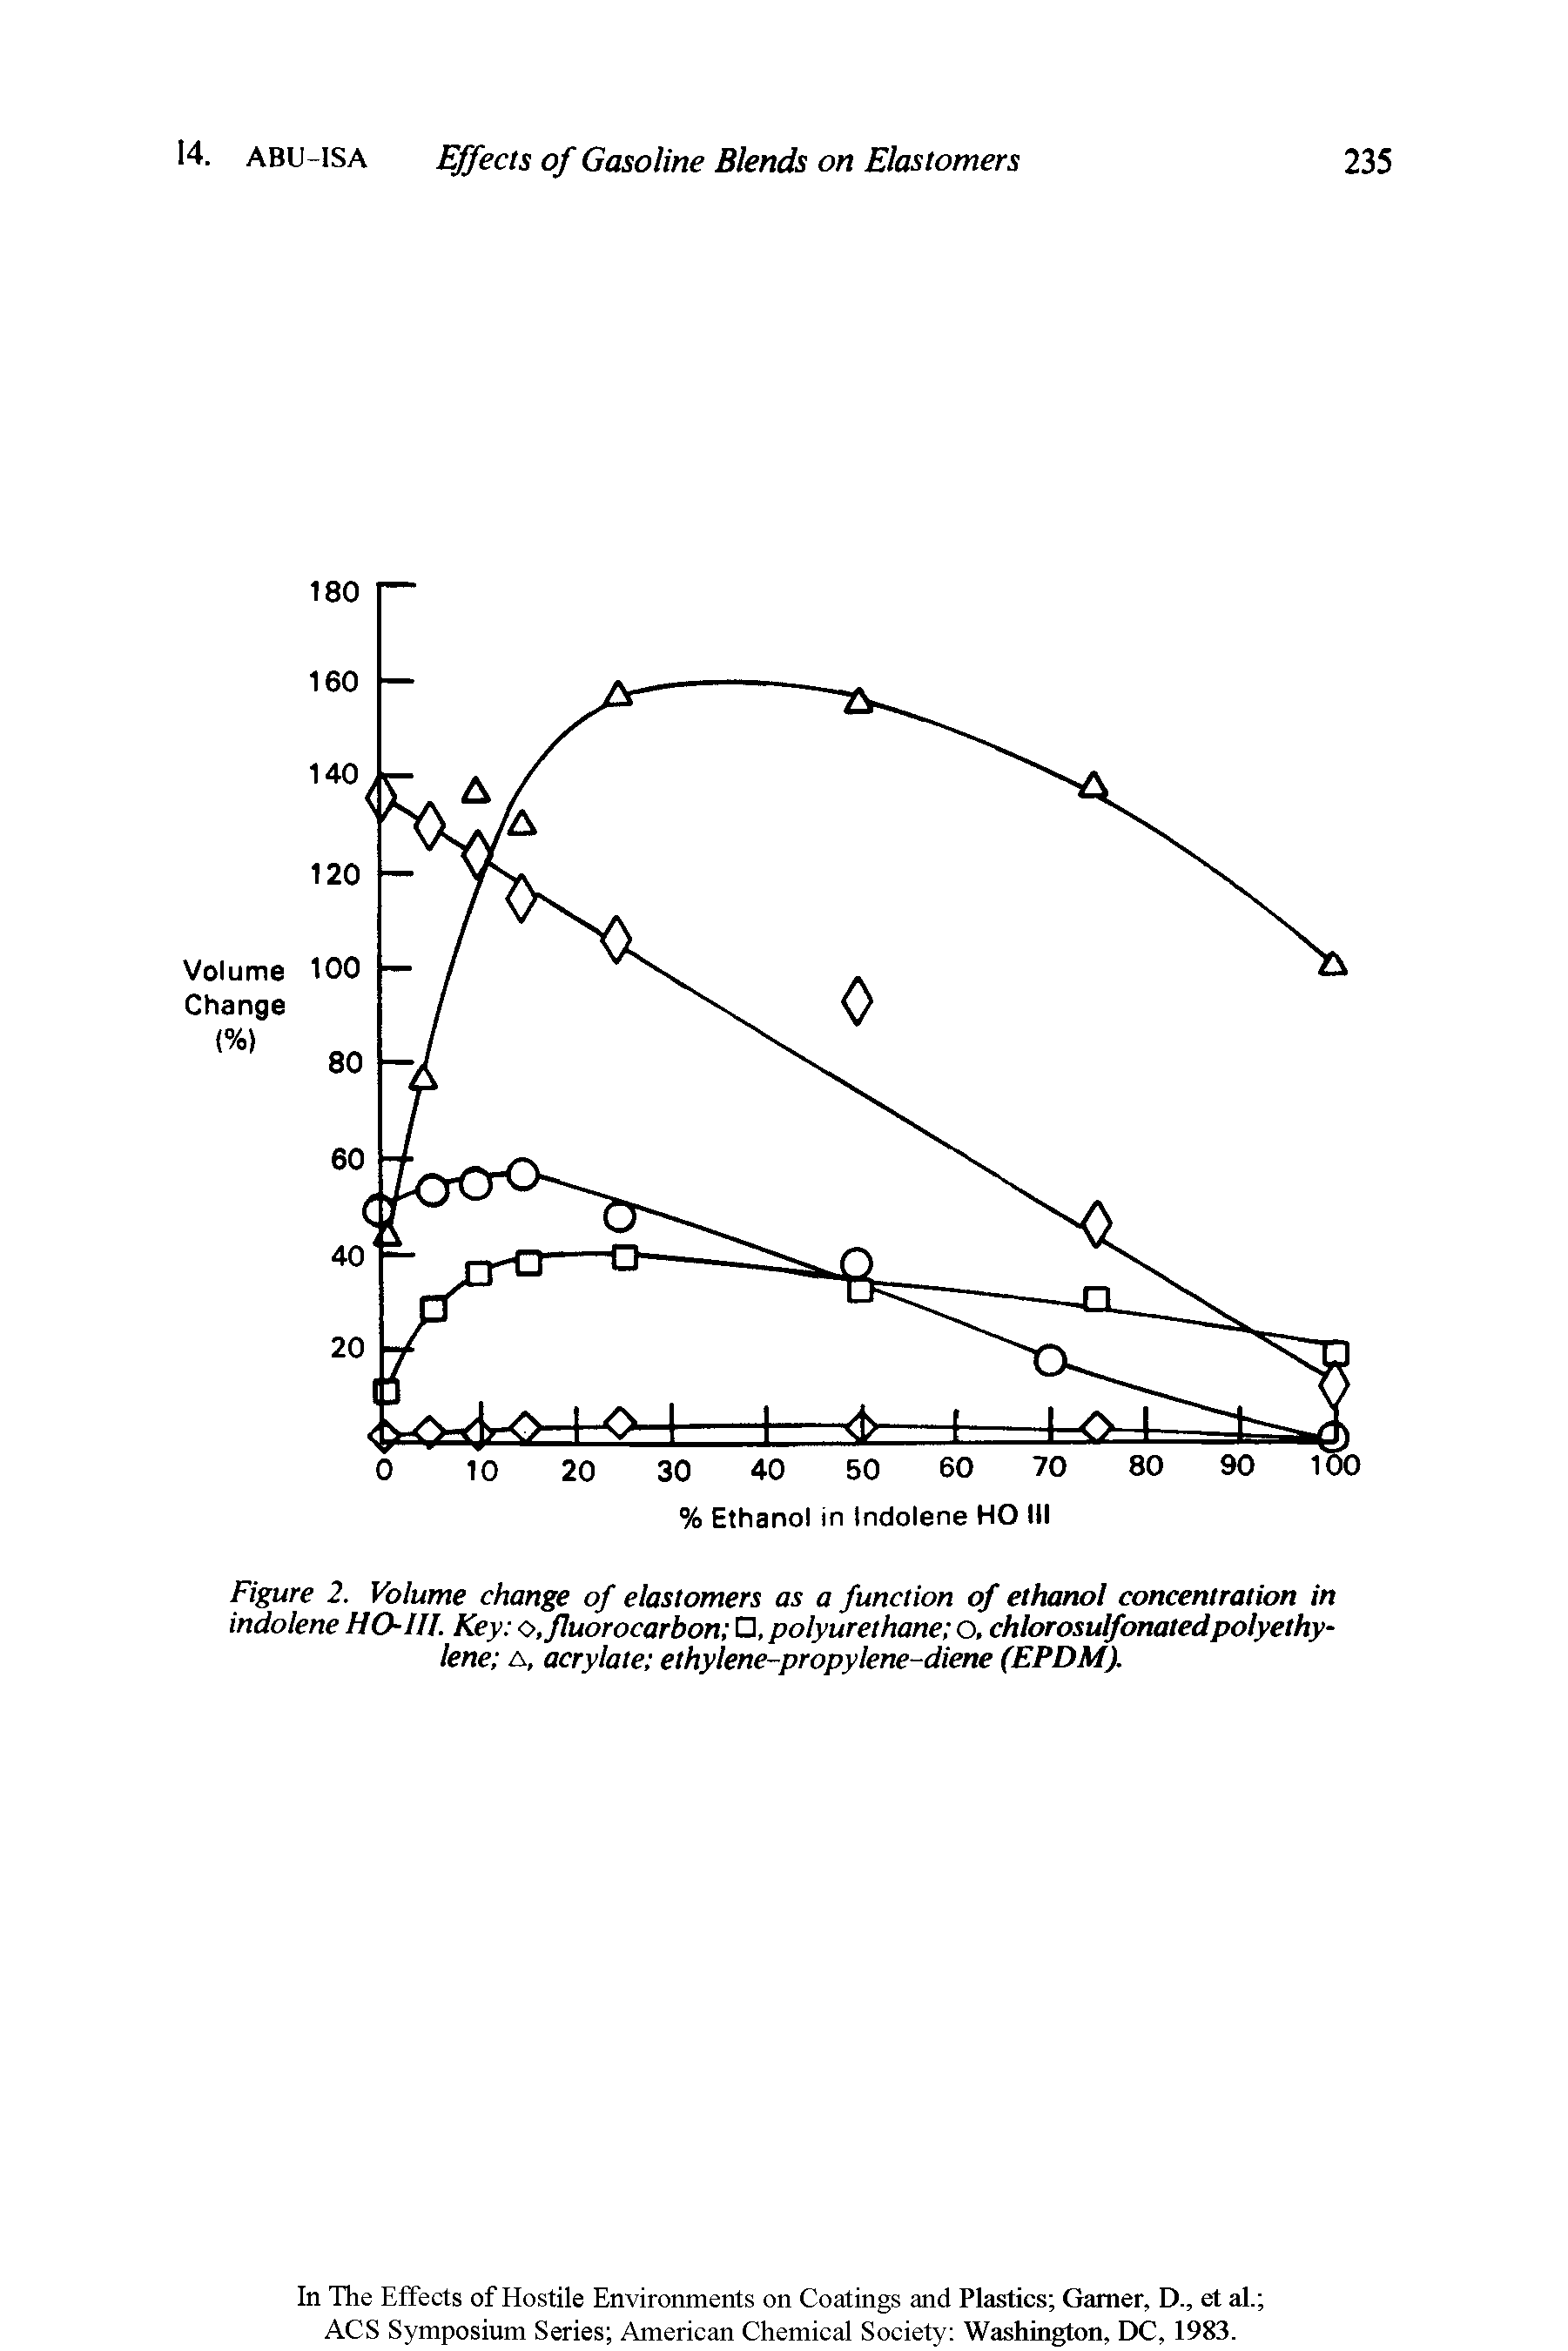 Figure 2. Volume change of elastomers as a function of ethanol concentration in indolene HO-in. Key o,fluorocarbon , polyurethane o, chlorosulfonatedpolyethylene A, acrylate ethylene-propylene-diene (EPDM).